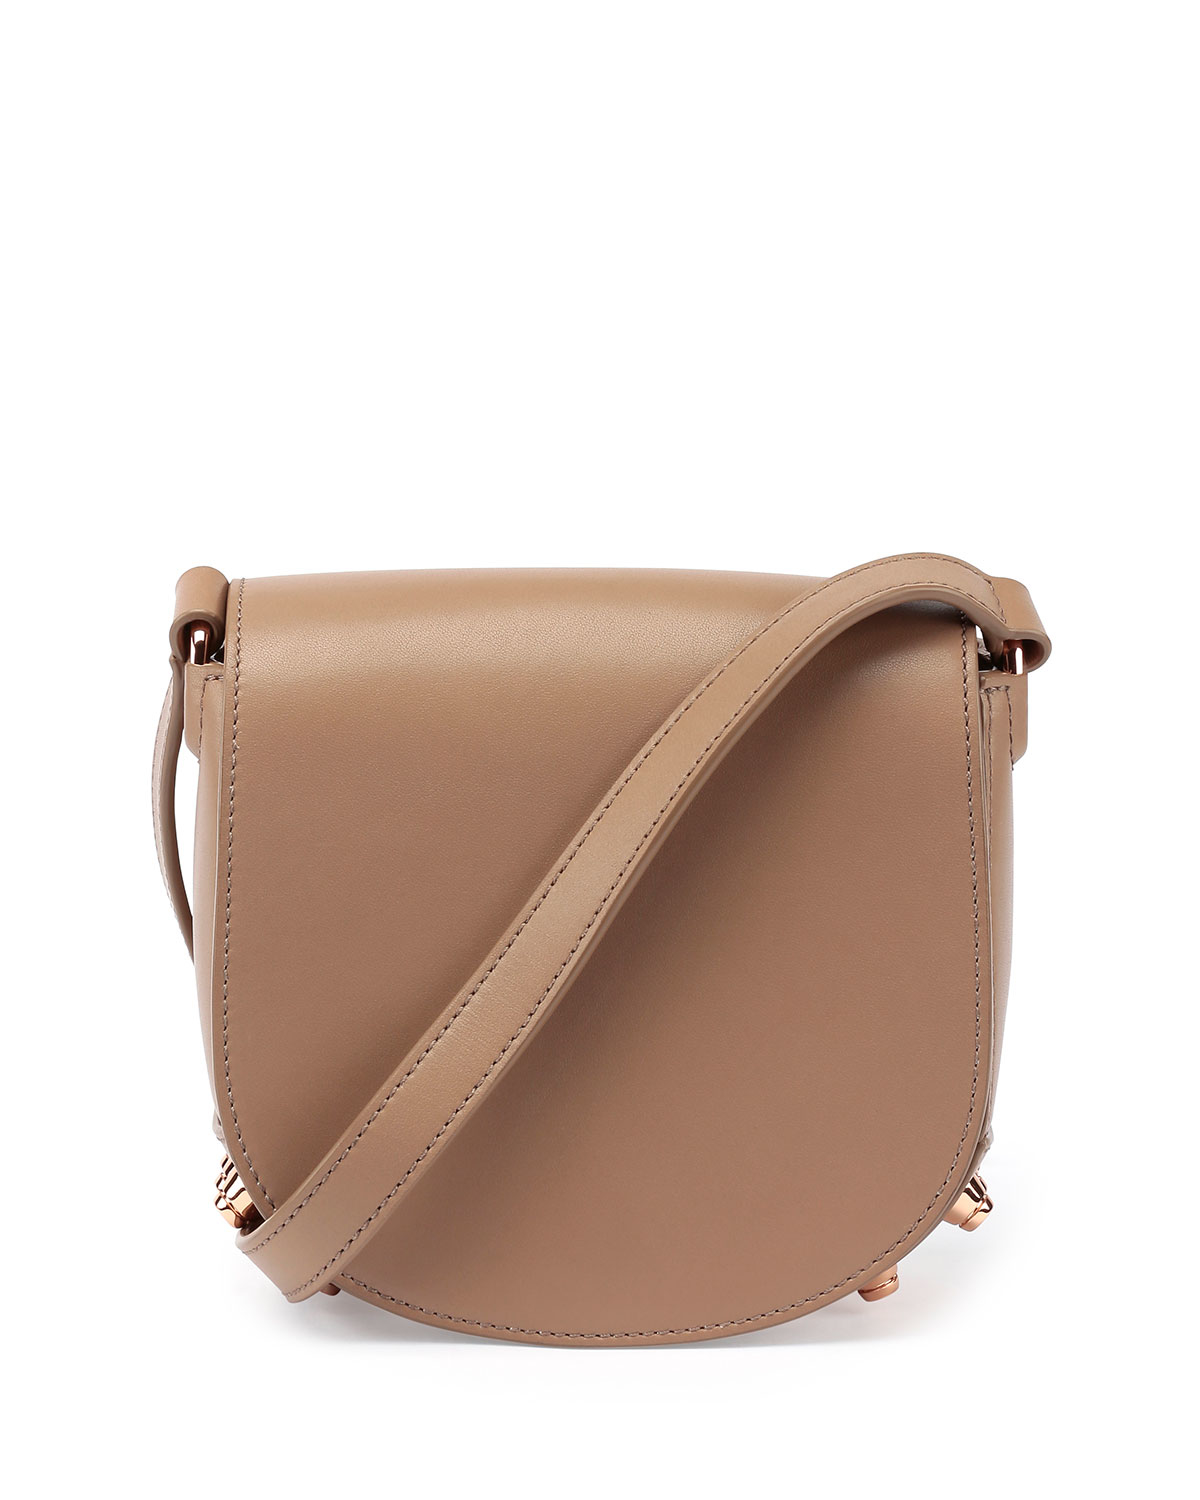 Alexander wang Lia Mini Leather Saddle Bag in Brown | Lyst